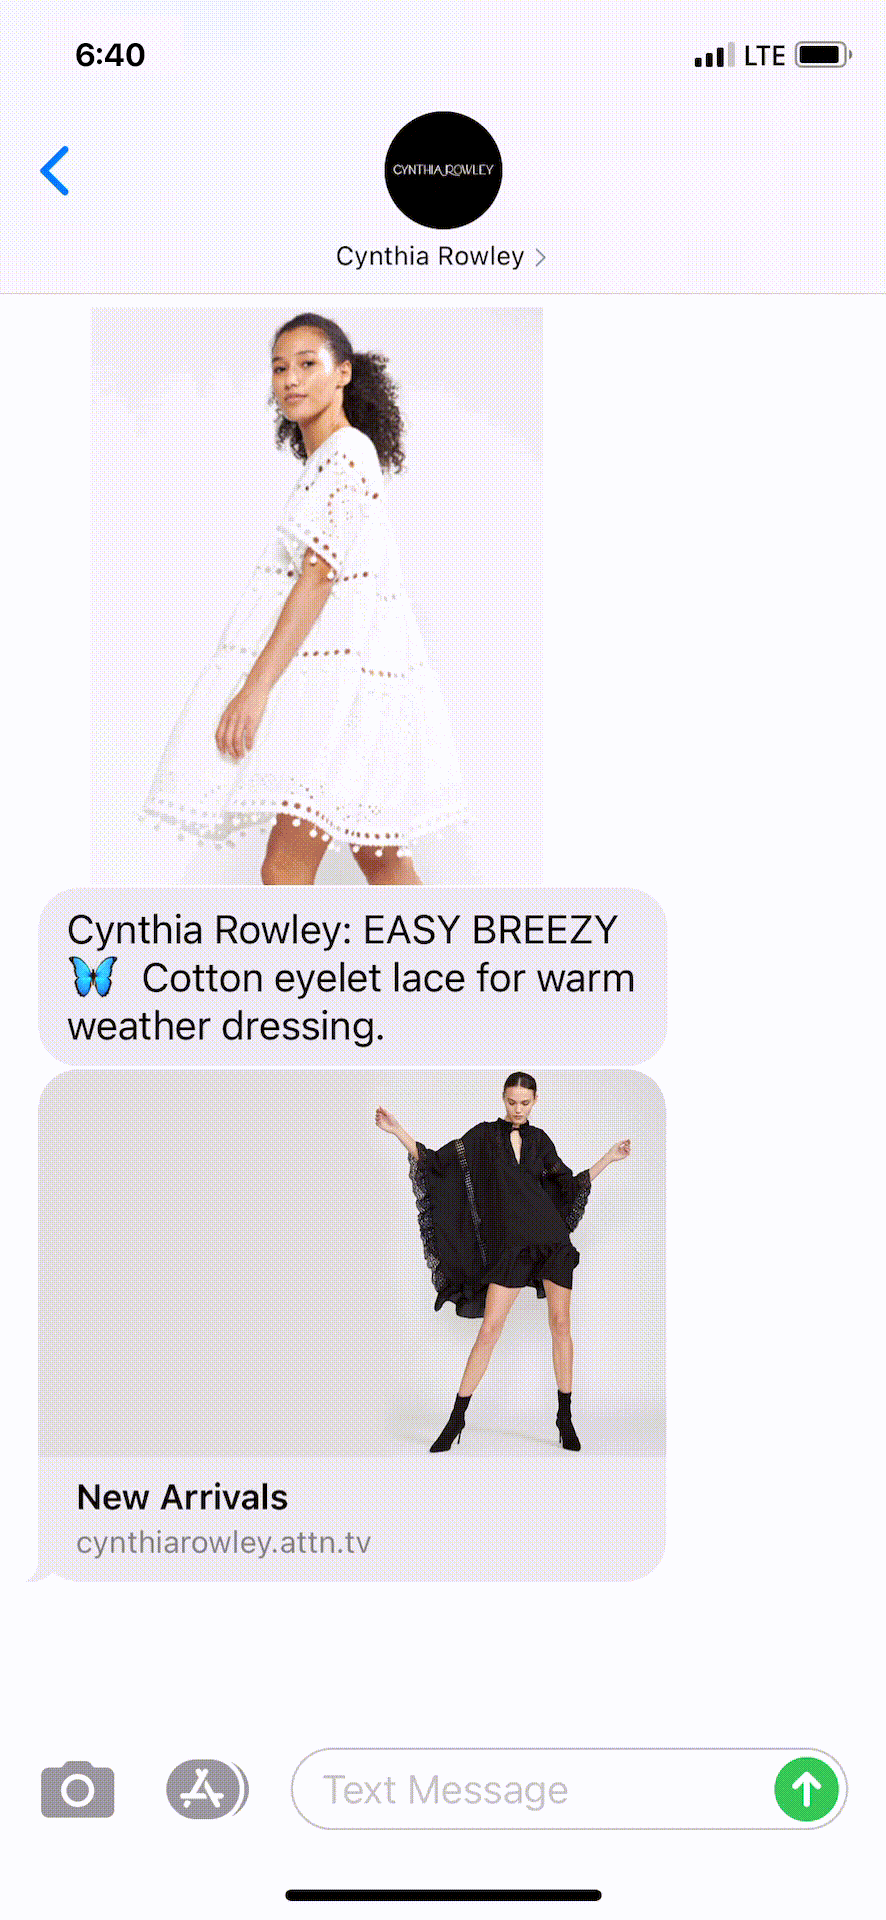 Cynthia-Rowley-Text-Message-Marketing-Example-08.07.2020